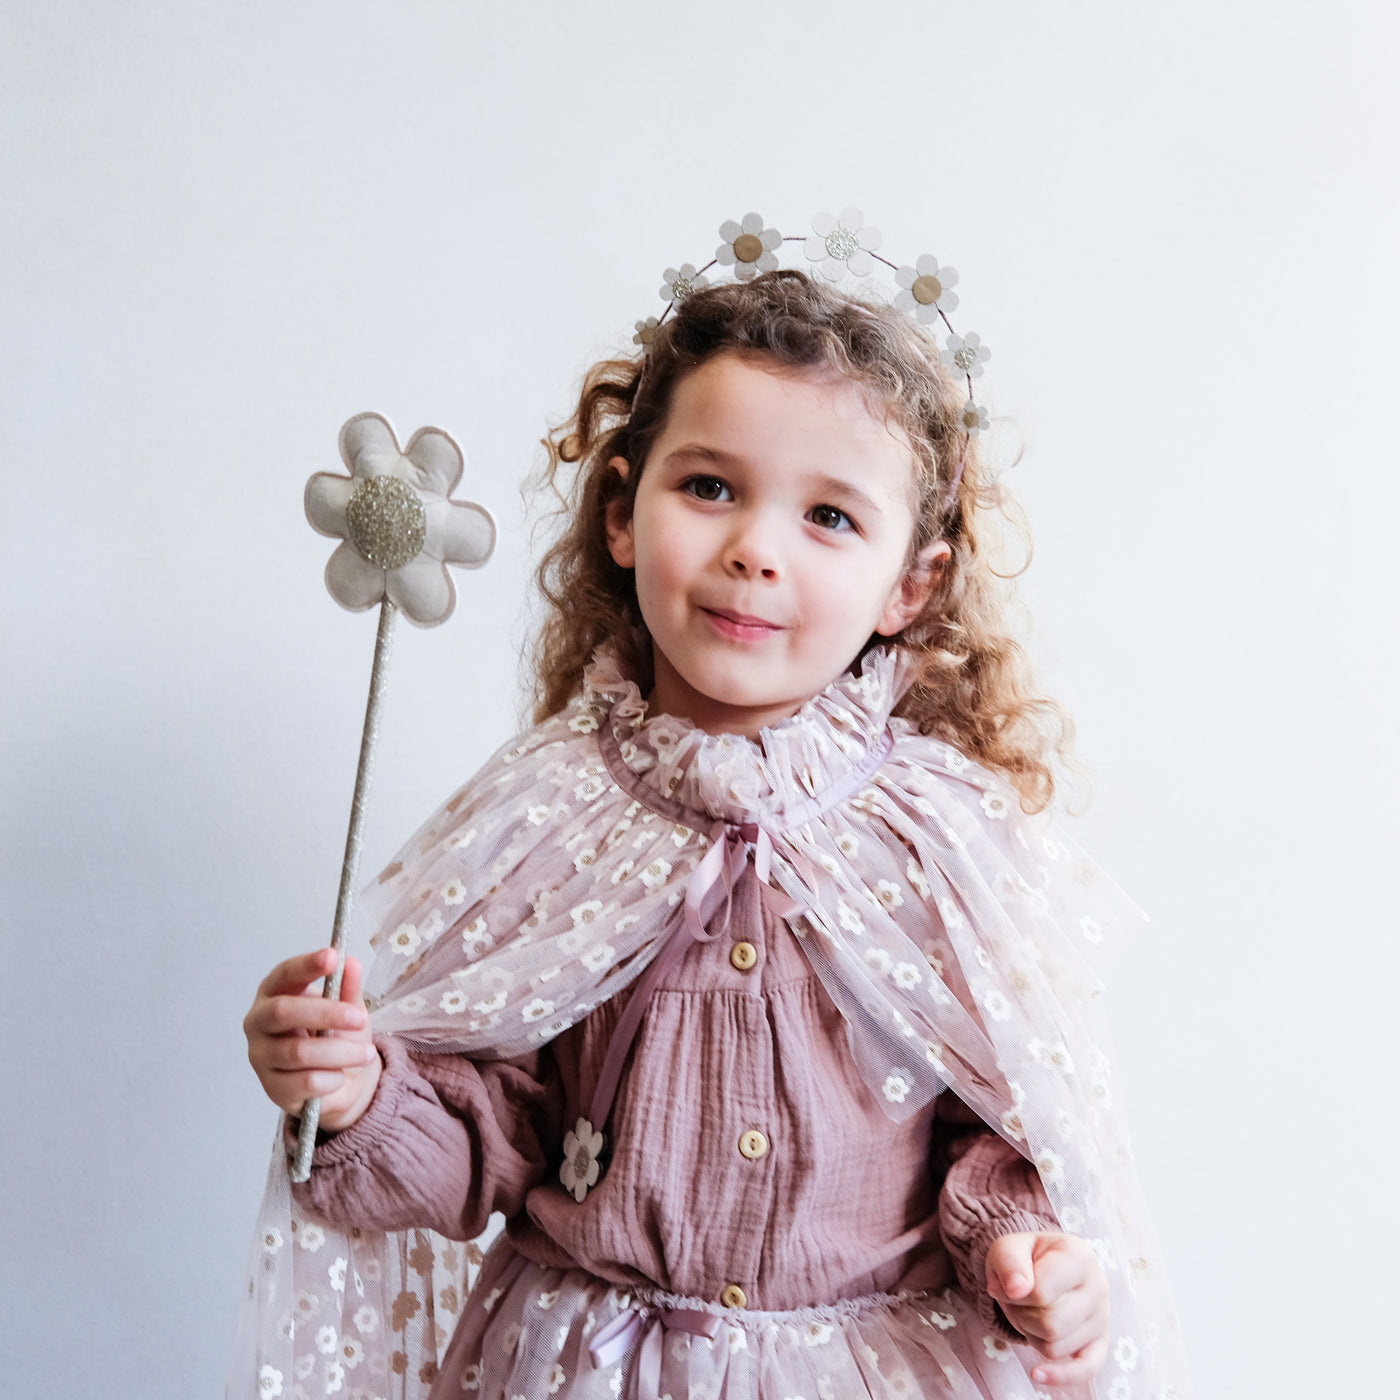 Little girl wearing a pretty daisy headband, holding a daisy wand